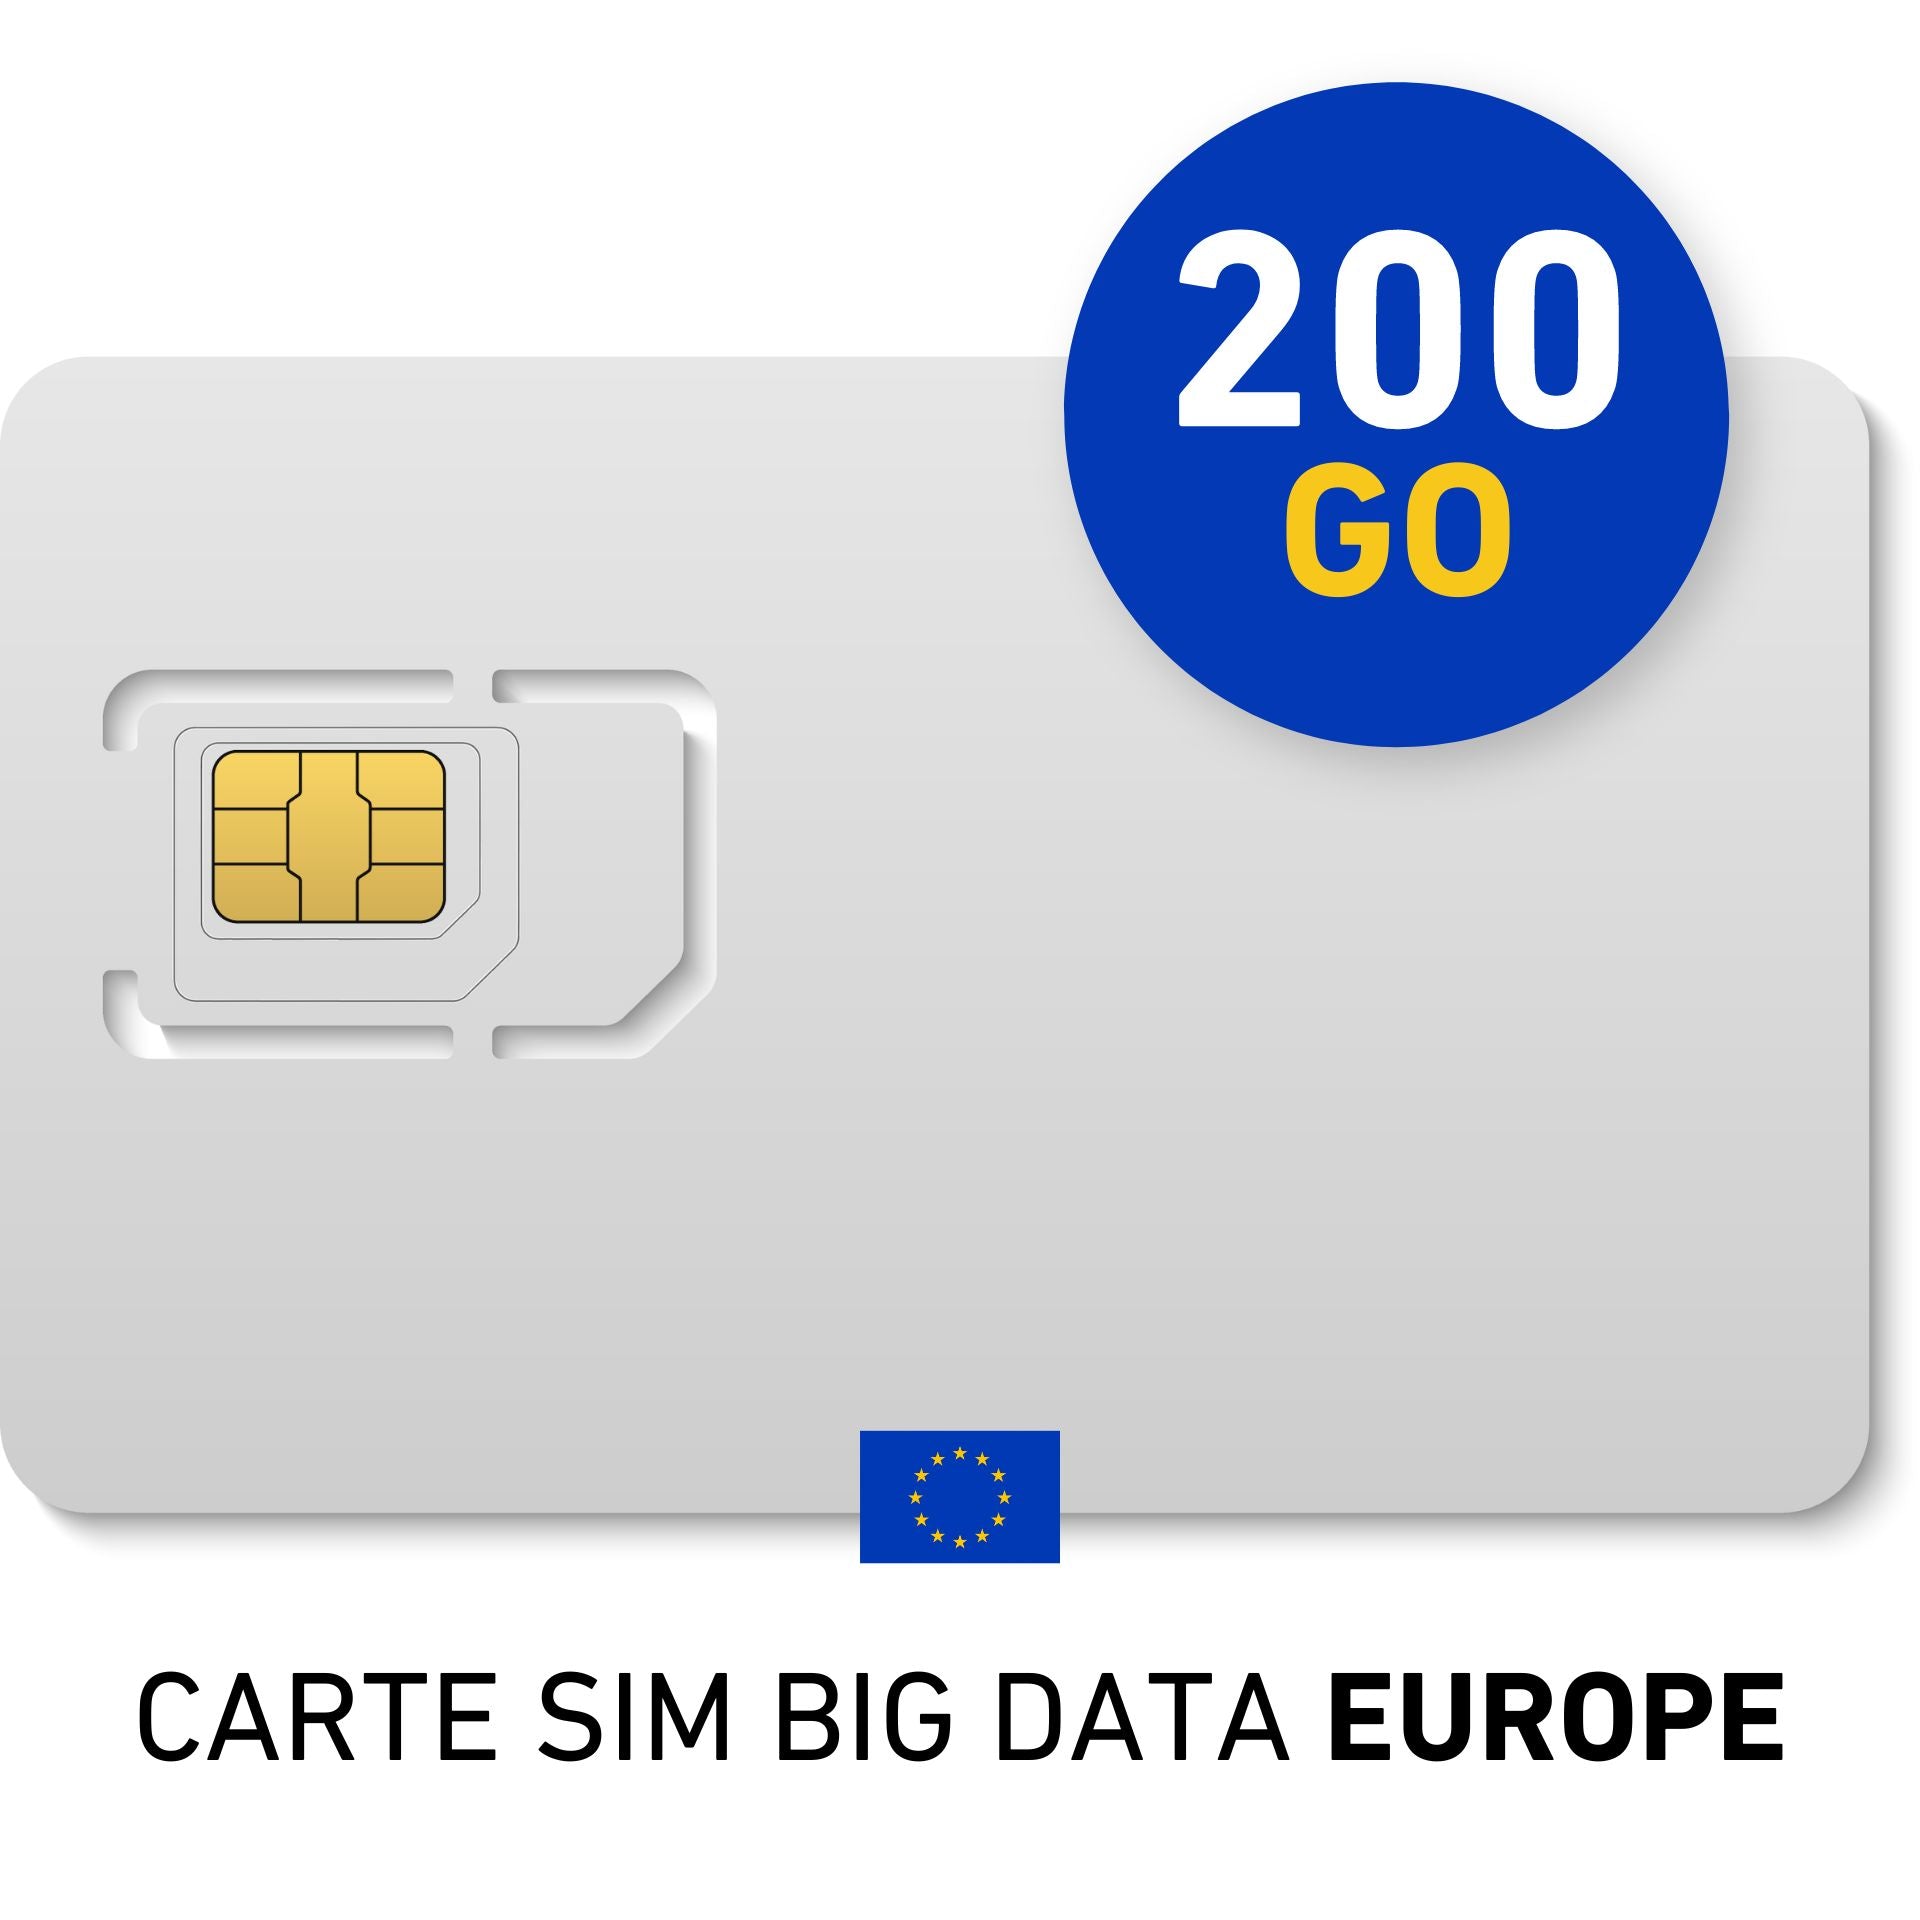 Abono mensual TARJETA SIM Grandes Datos Europa 200Go